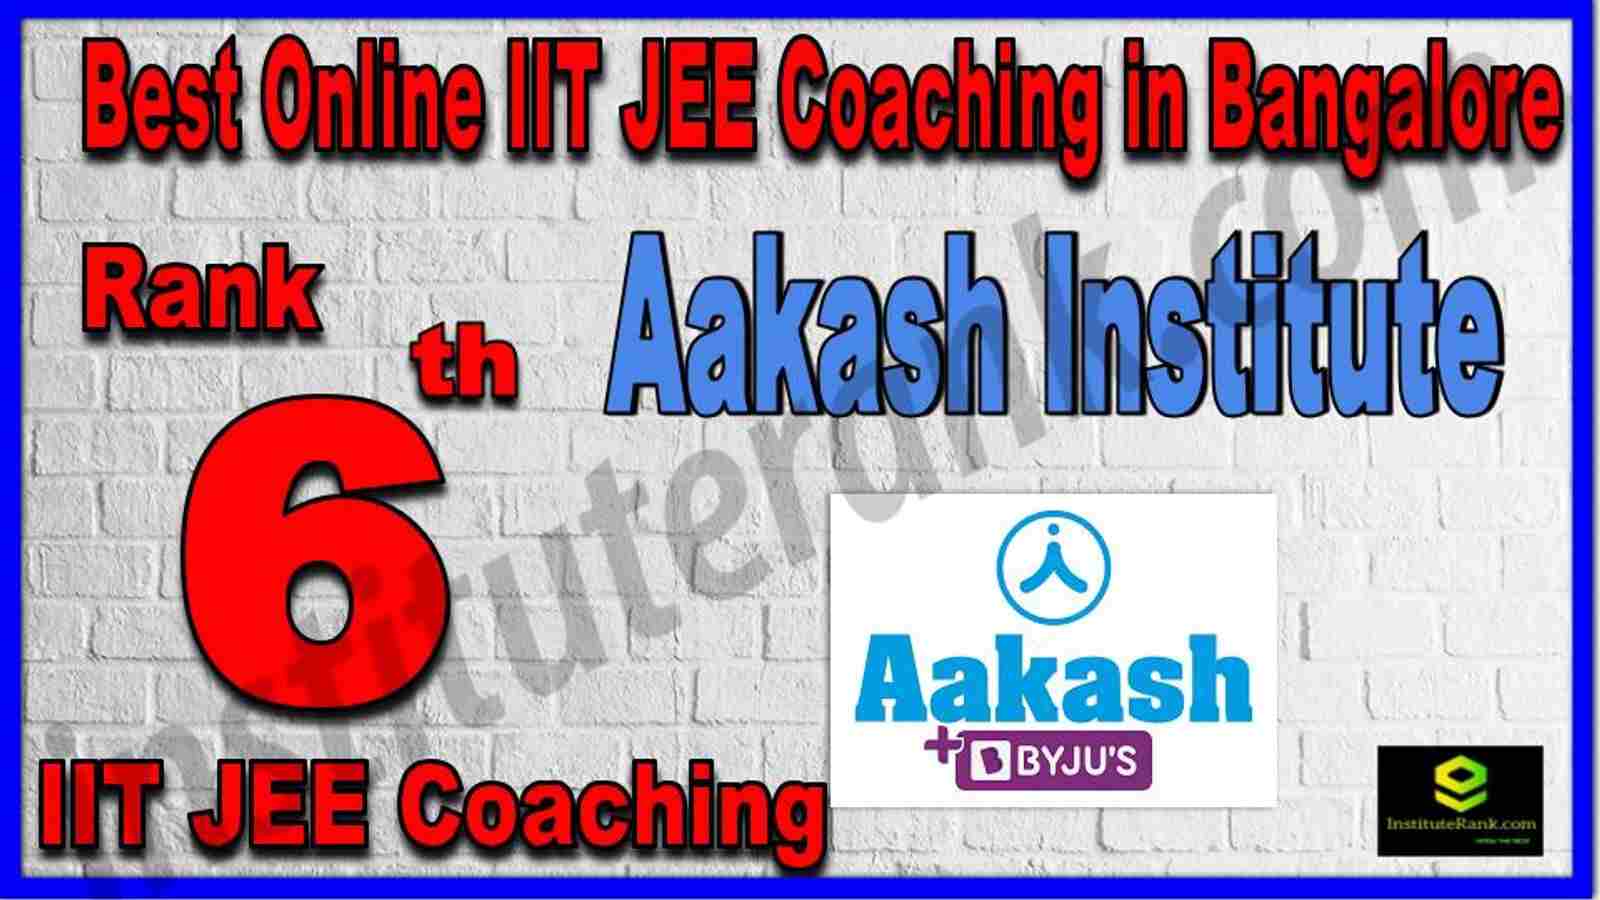 Rank 6th Best Online IIT JEE Coaching in Bangalore